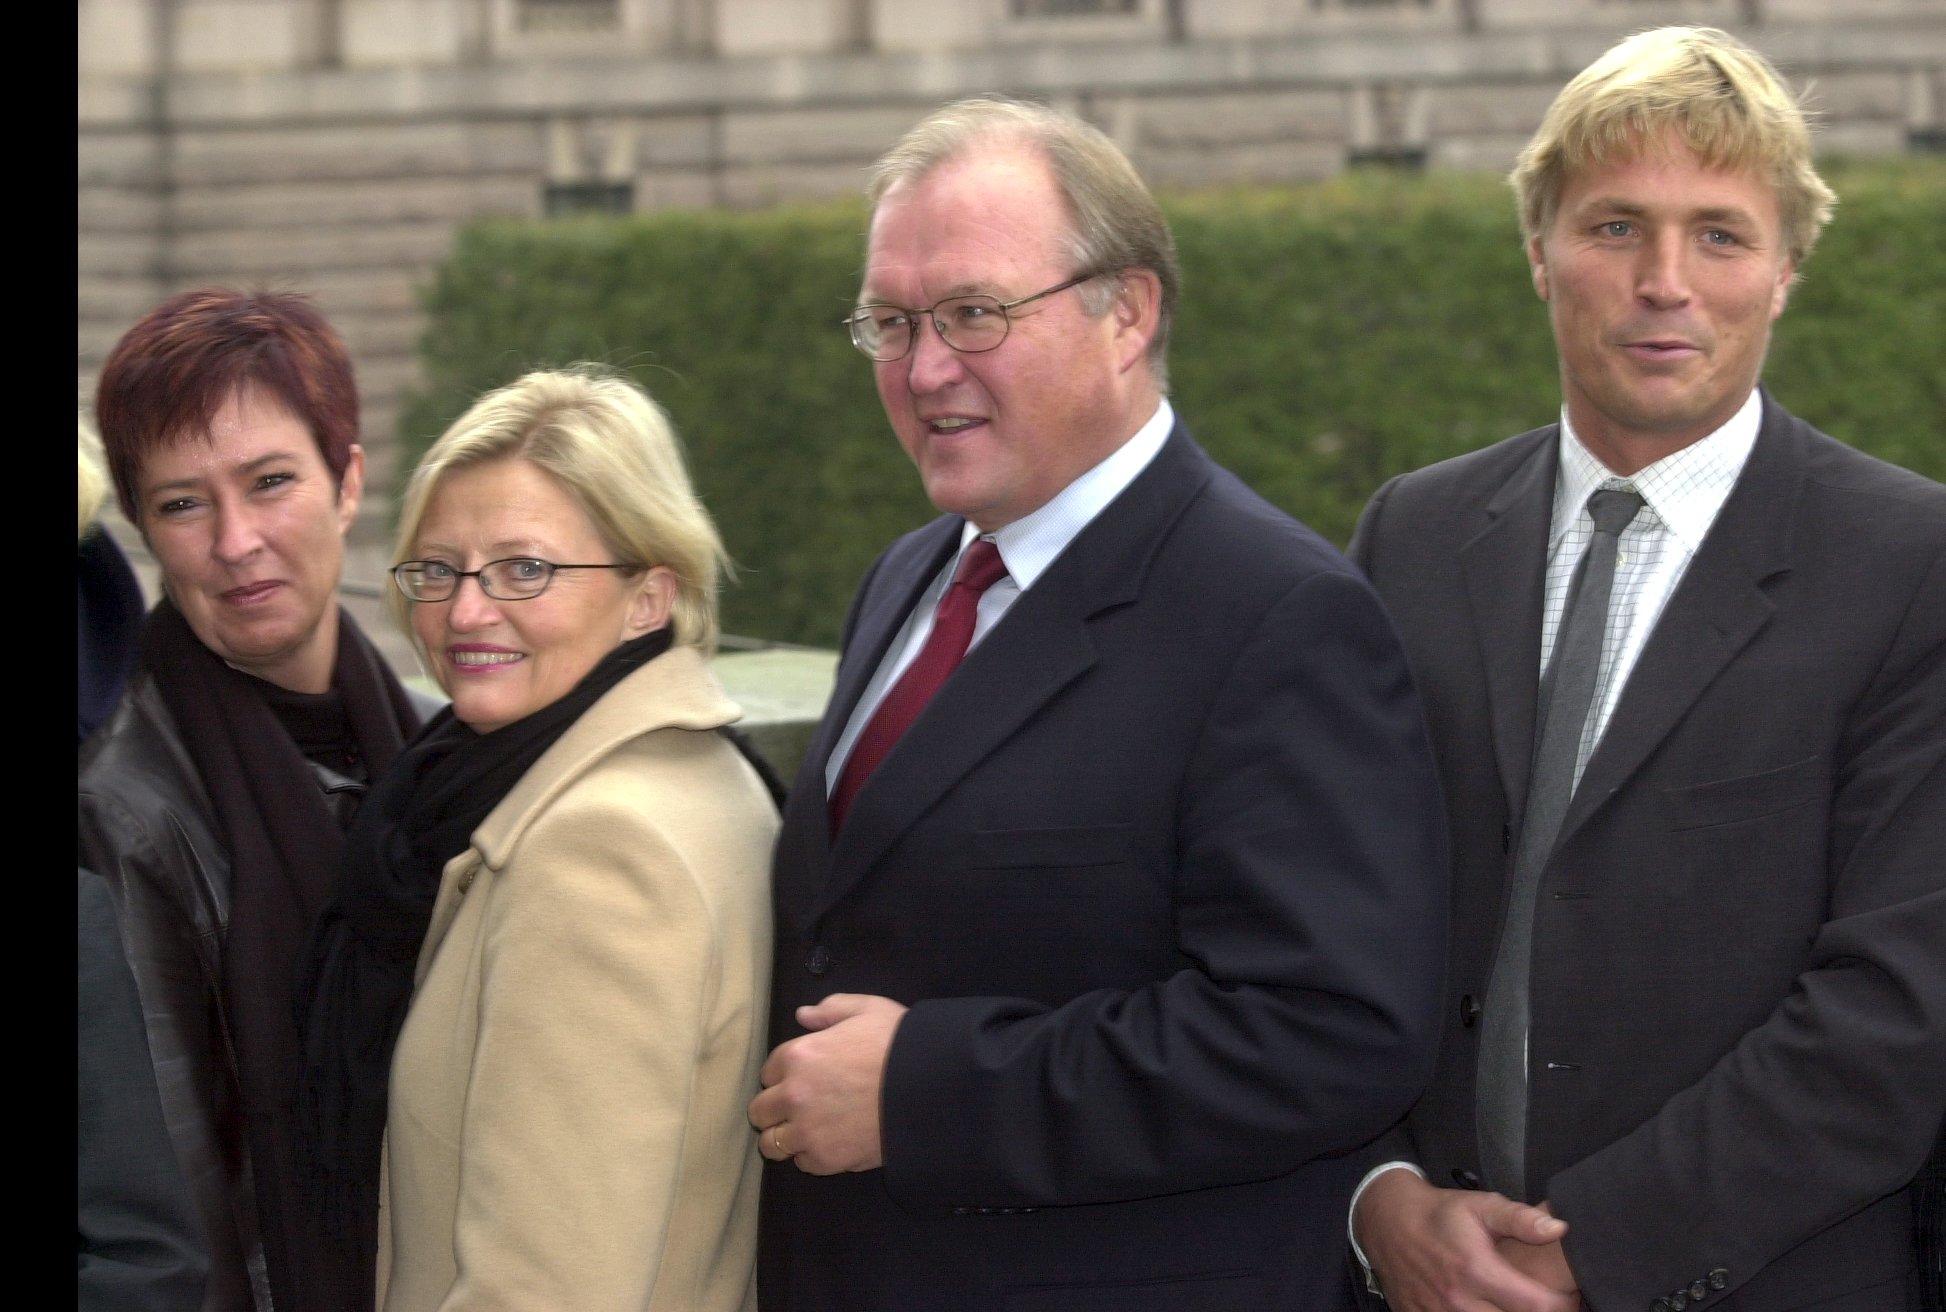 S-ledare, Thomas Bodström, Partiledare, Socialdemokraterna, Mona Sahlin